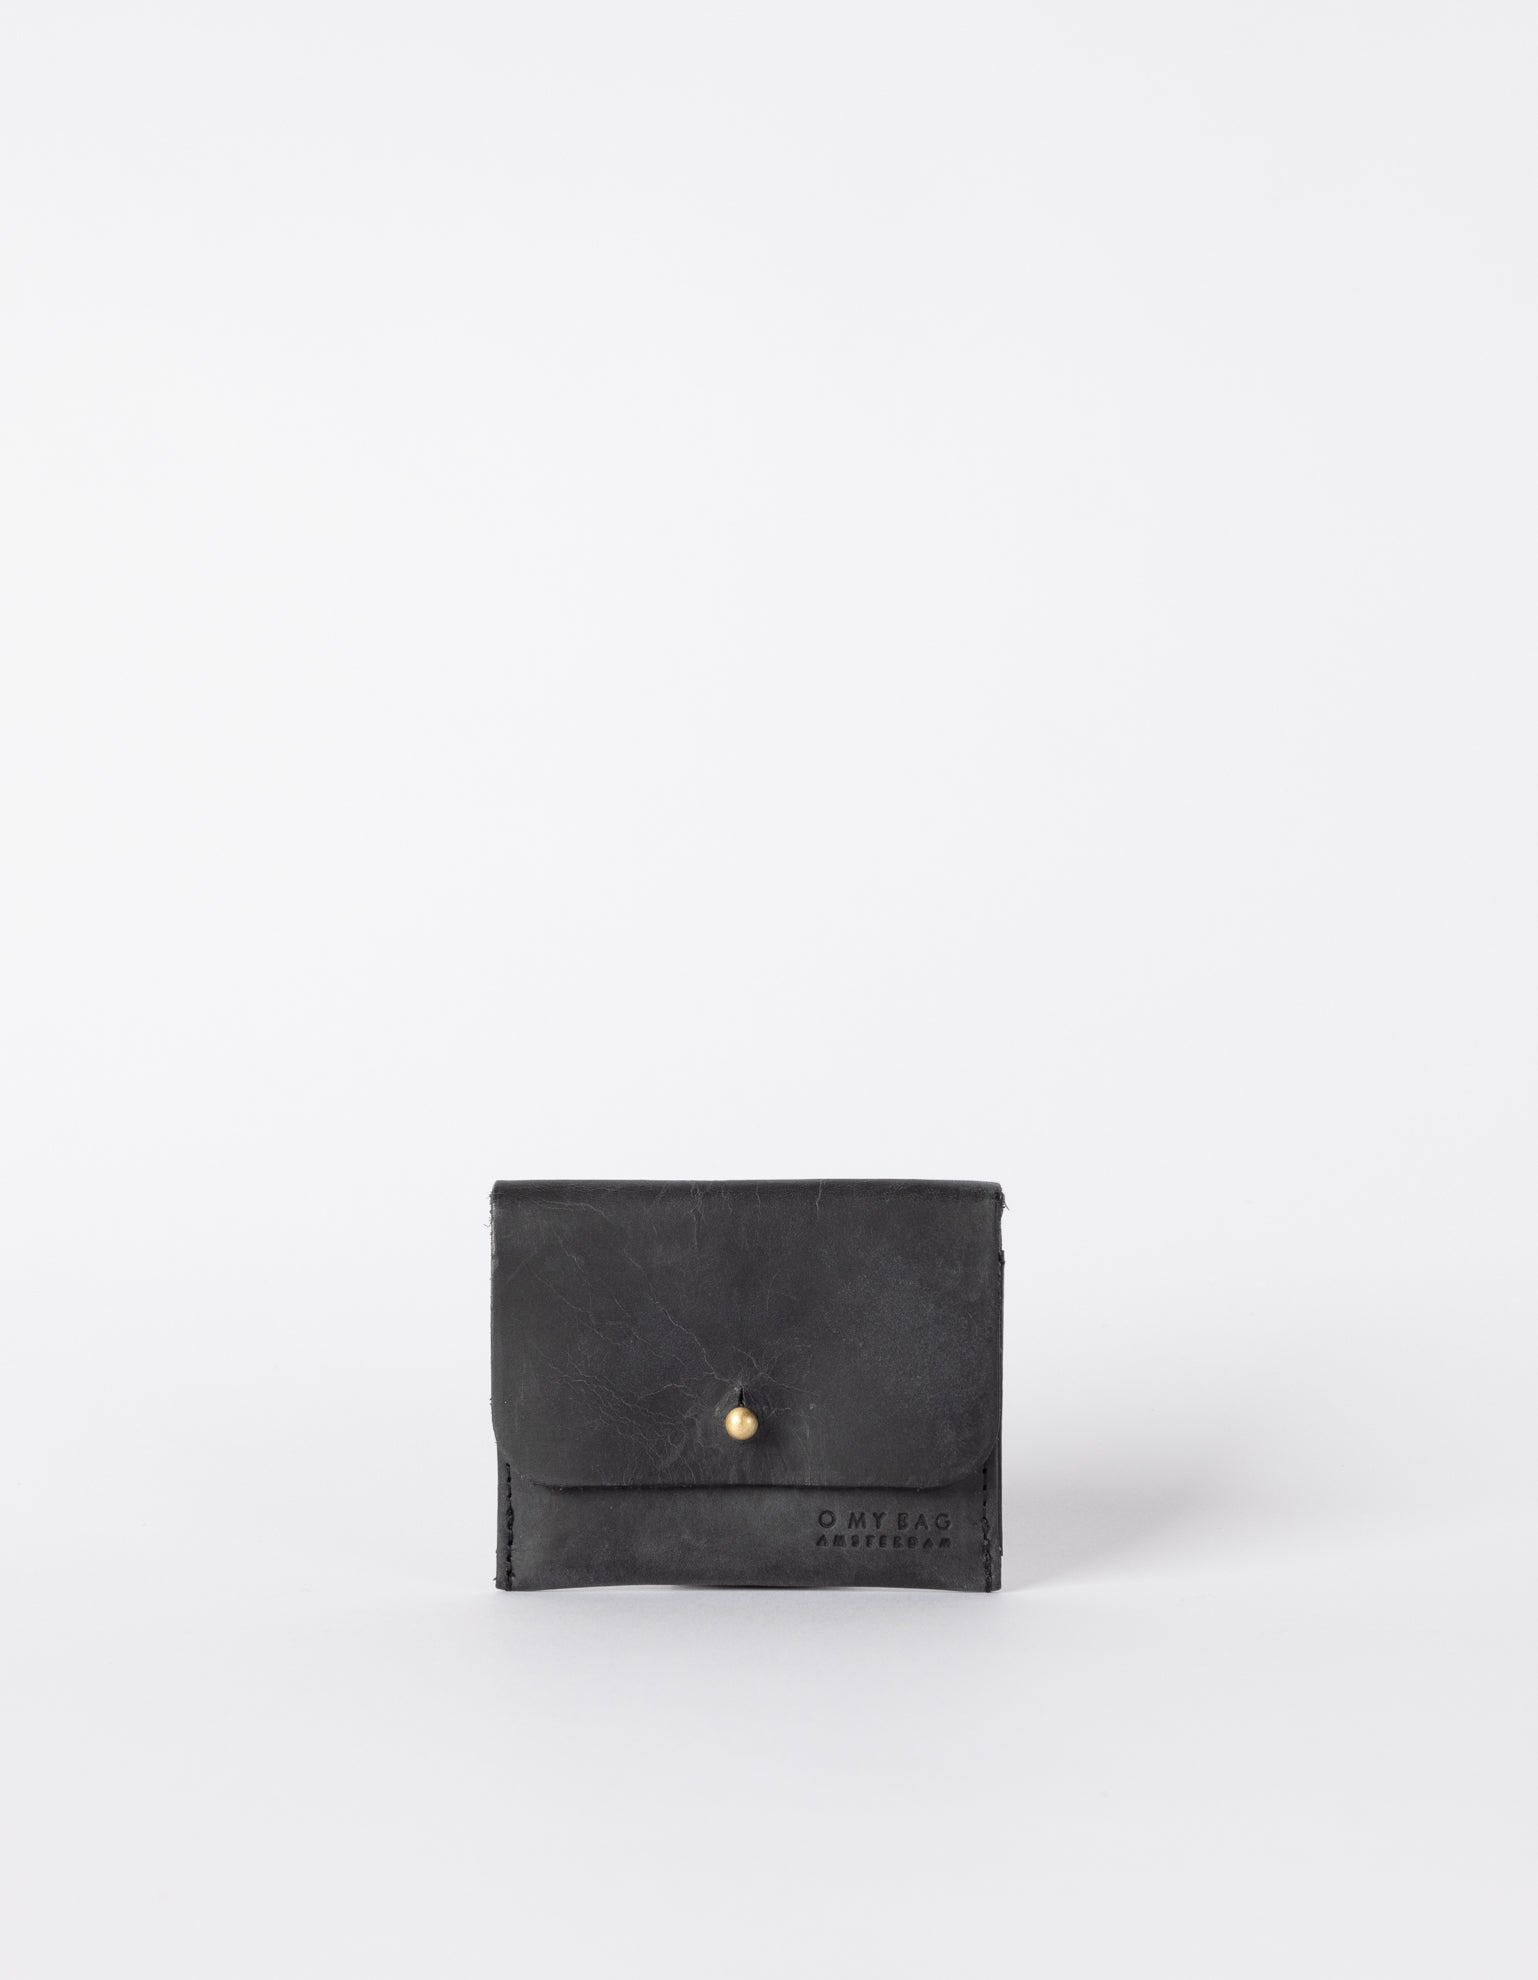 Small Black cardholder. Square shape. Front image